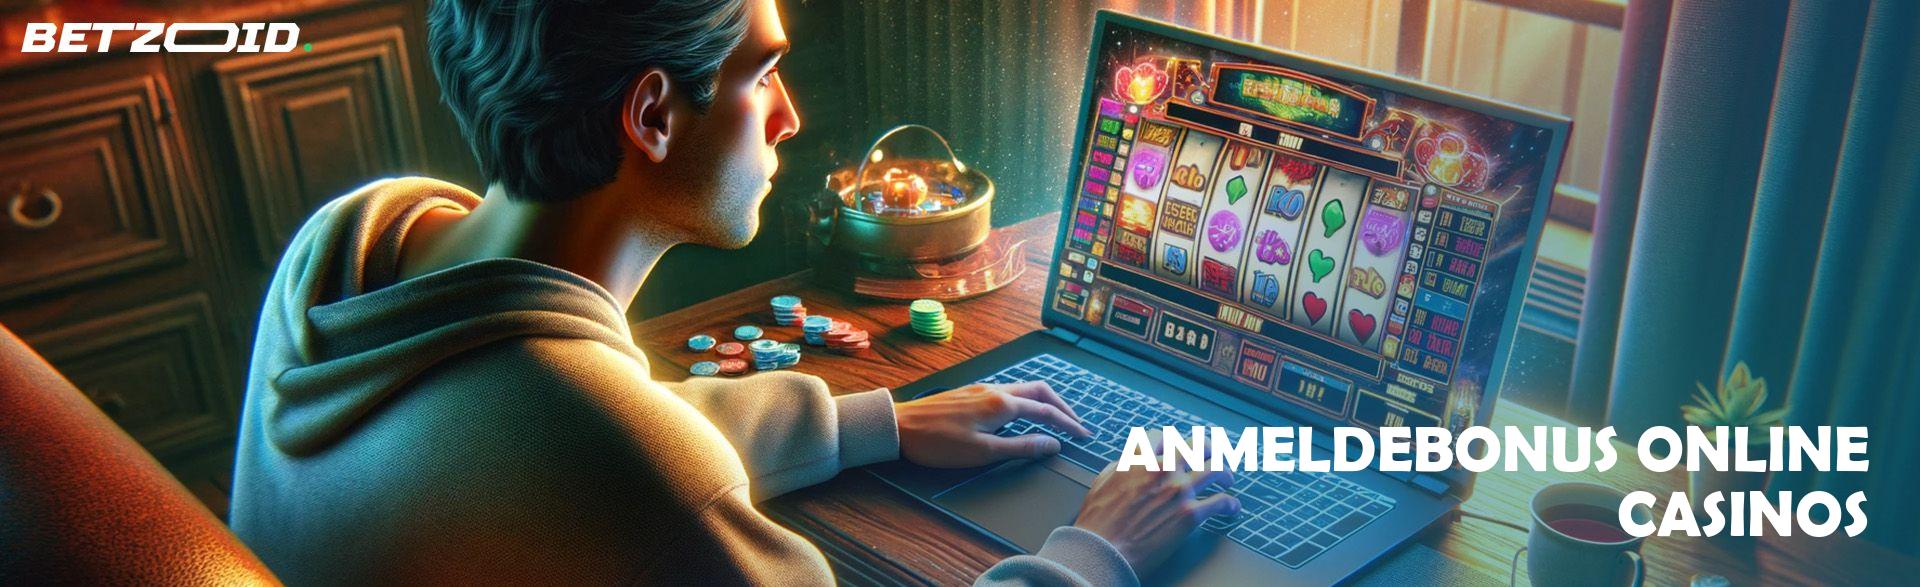 Anmeldebonus Online Casinos.